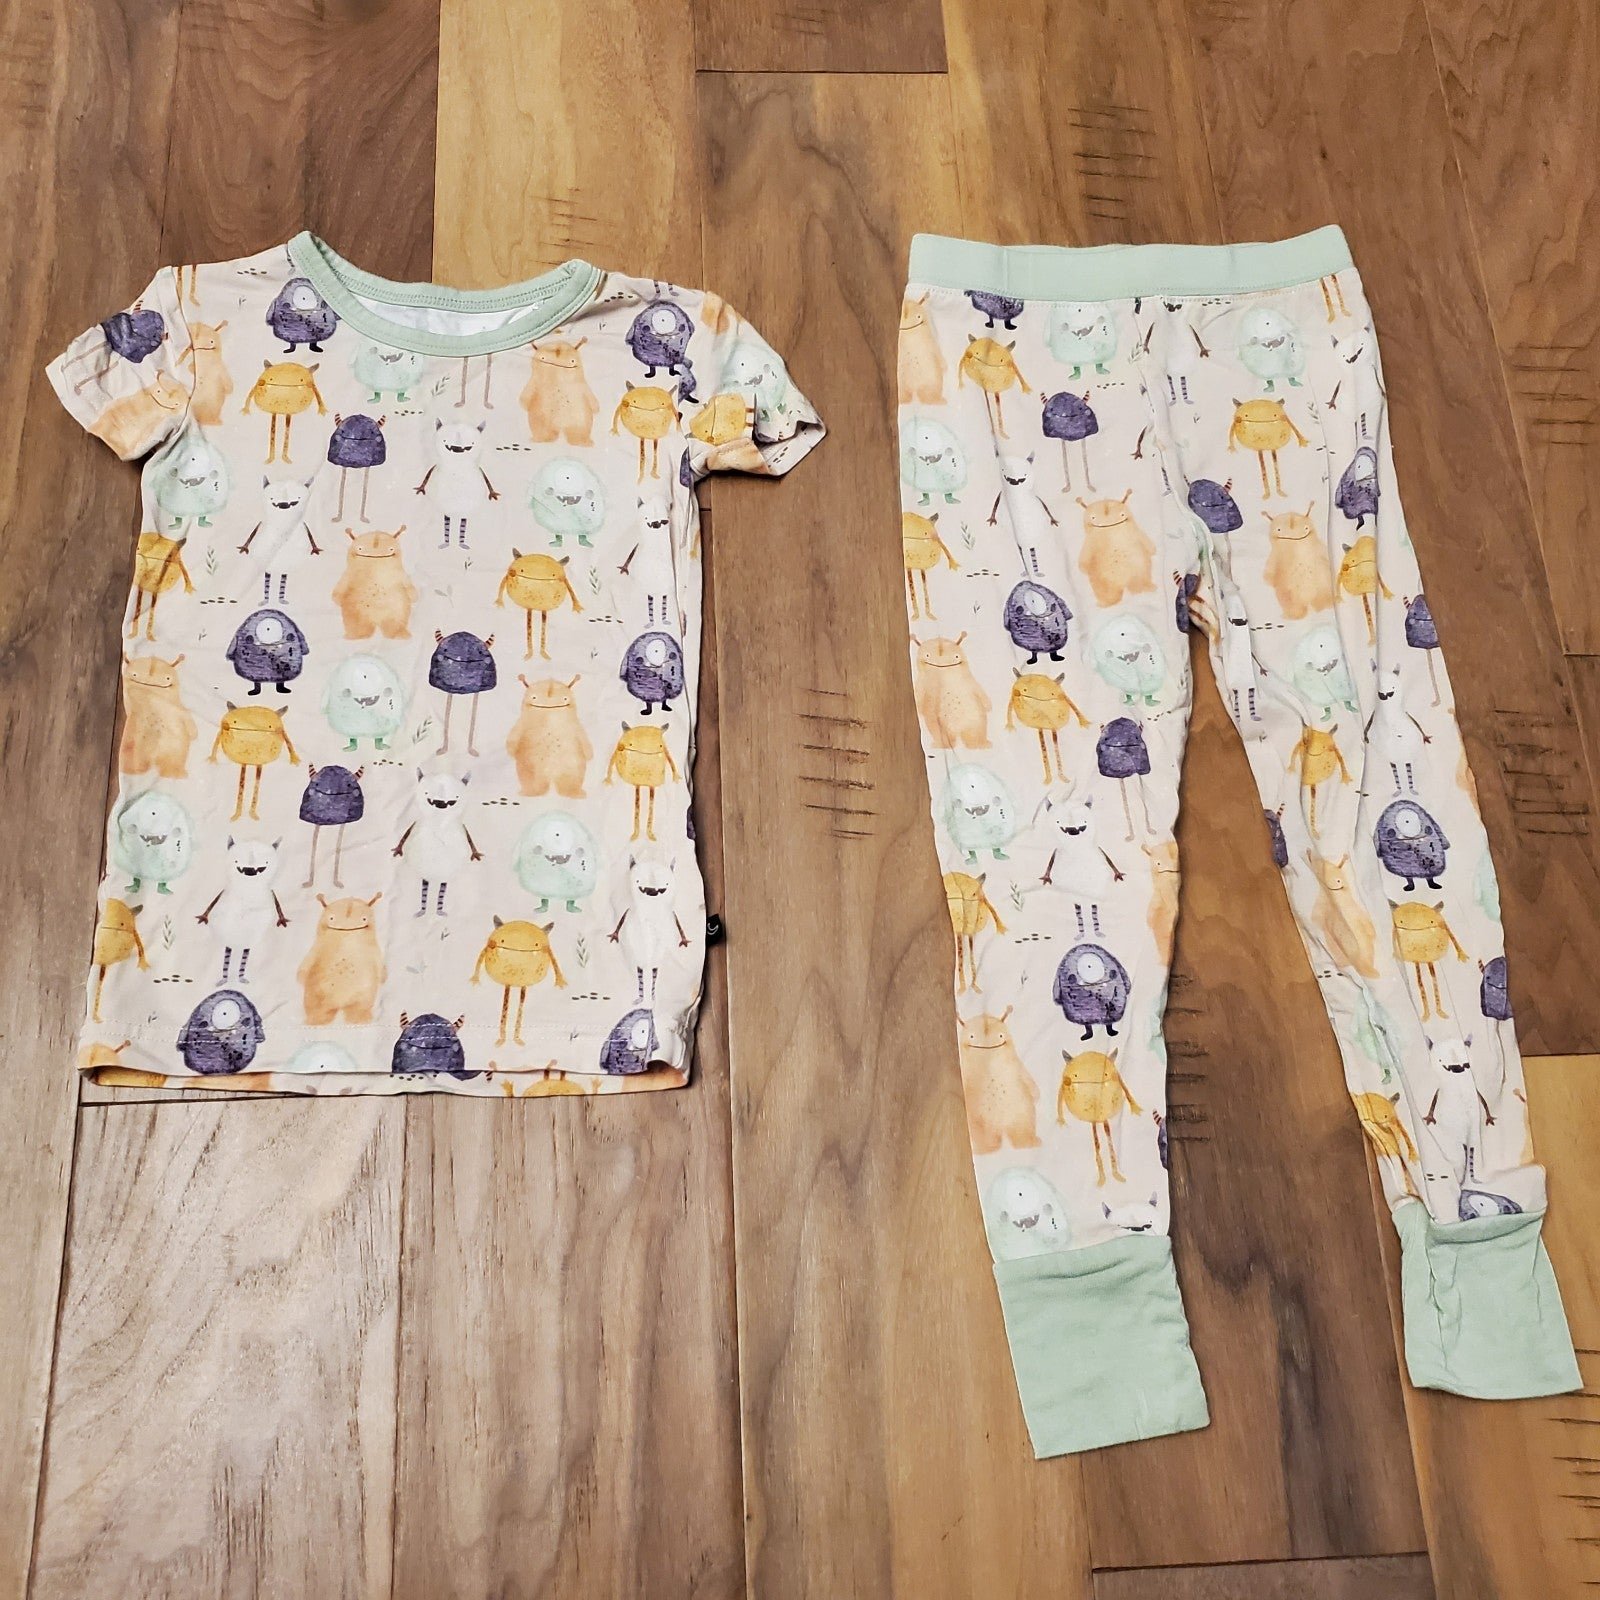 The Sleepy Sloth Scary Cute Short Sleeve Two-Piece Pajama Set - 3T gth6bSlp1